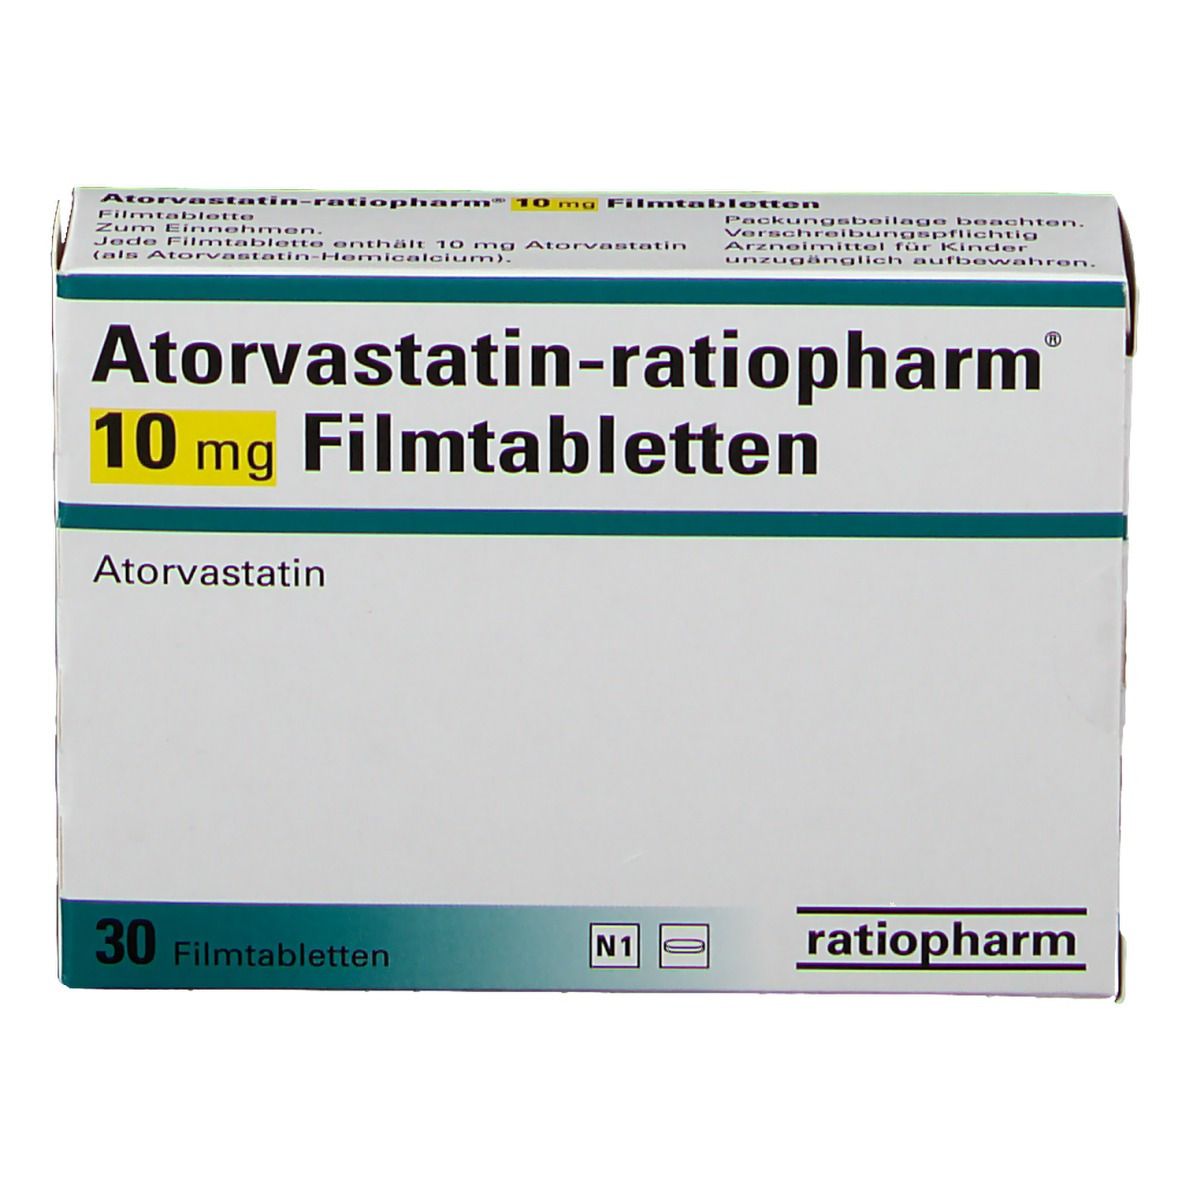 Atorvastatin-ratiopharm® 10 mg